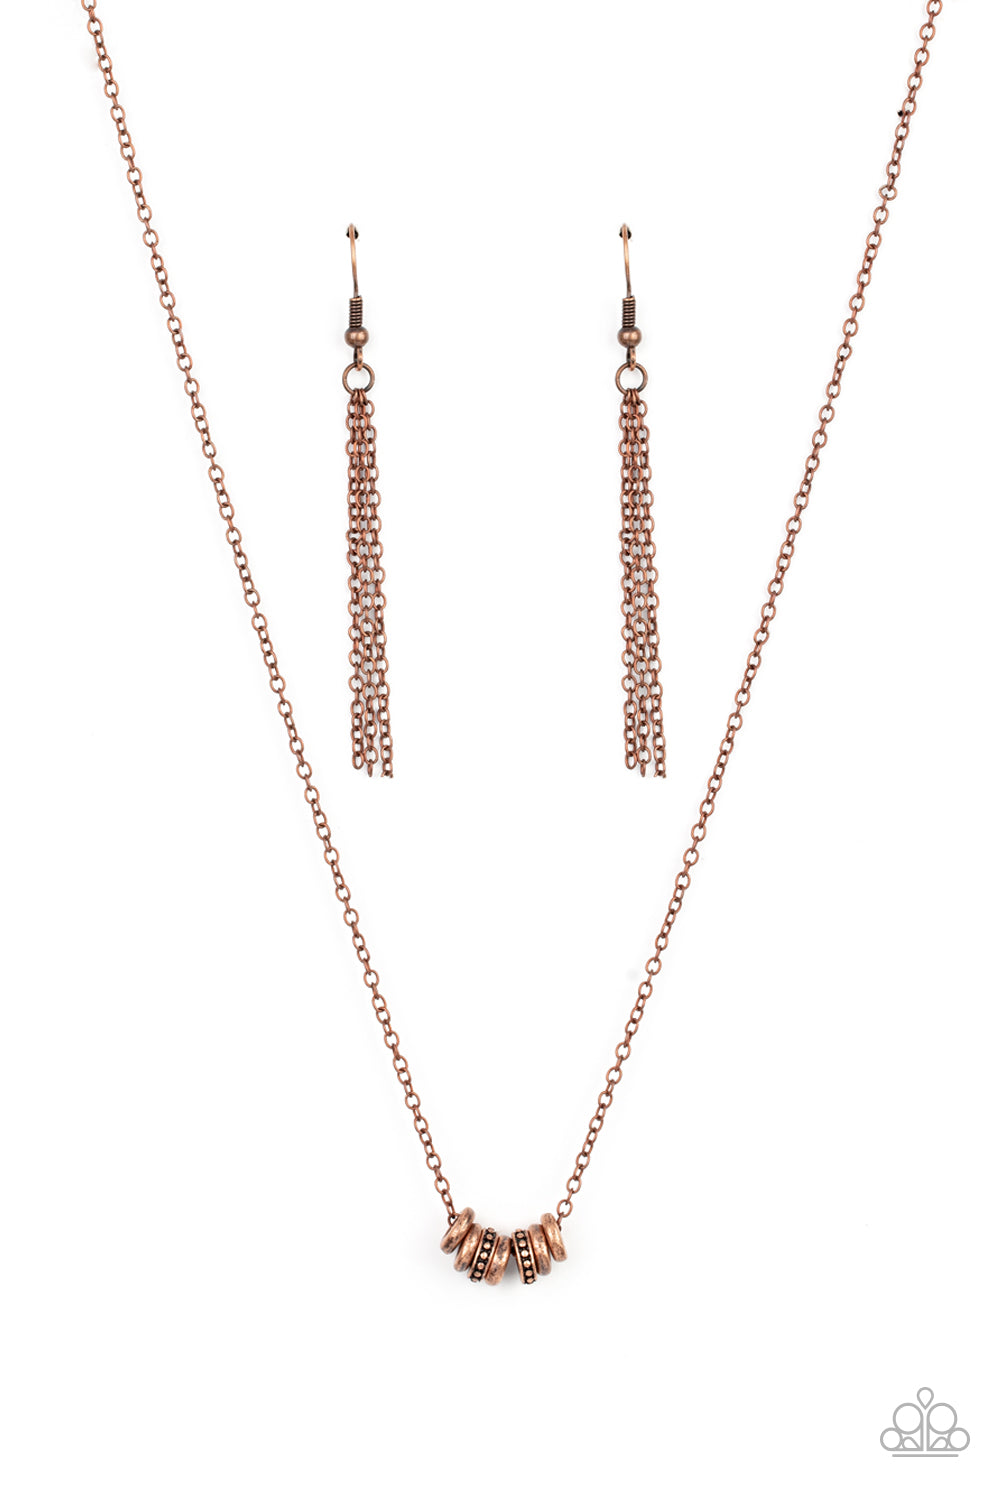 Dainty Dalliance - copper - Paparazzi necklace